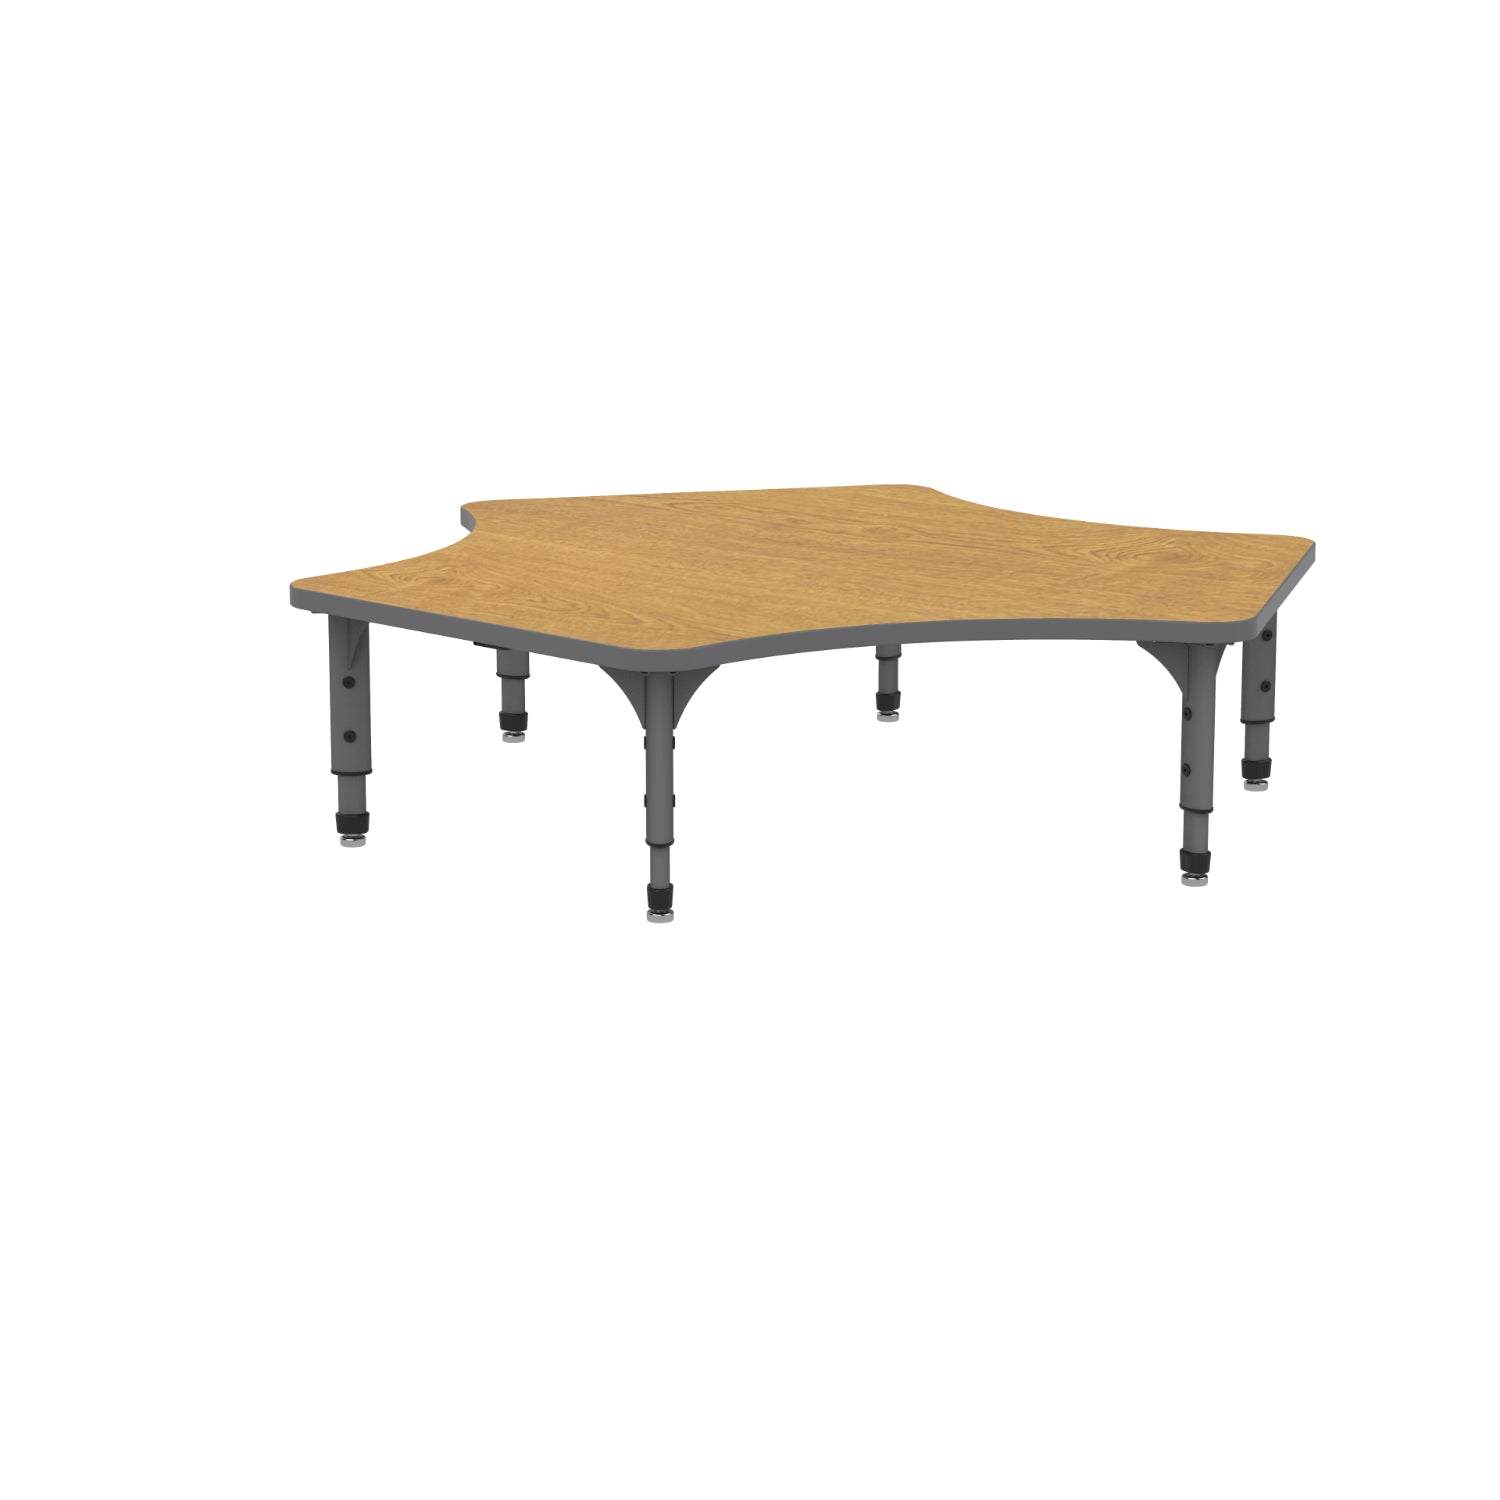 Adjustable Height Floor Activity Table, 60" Delta